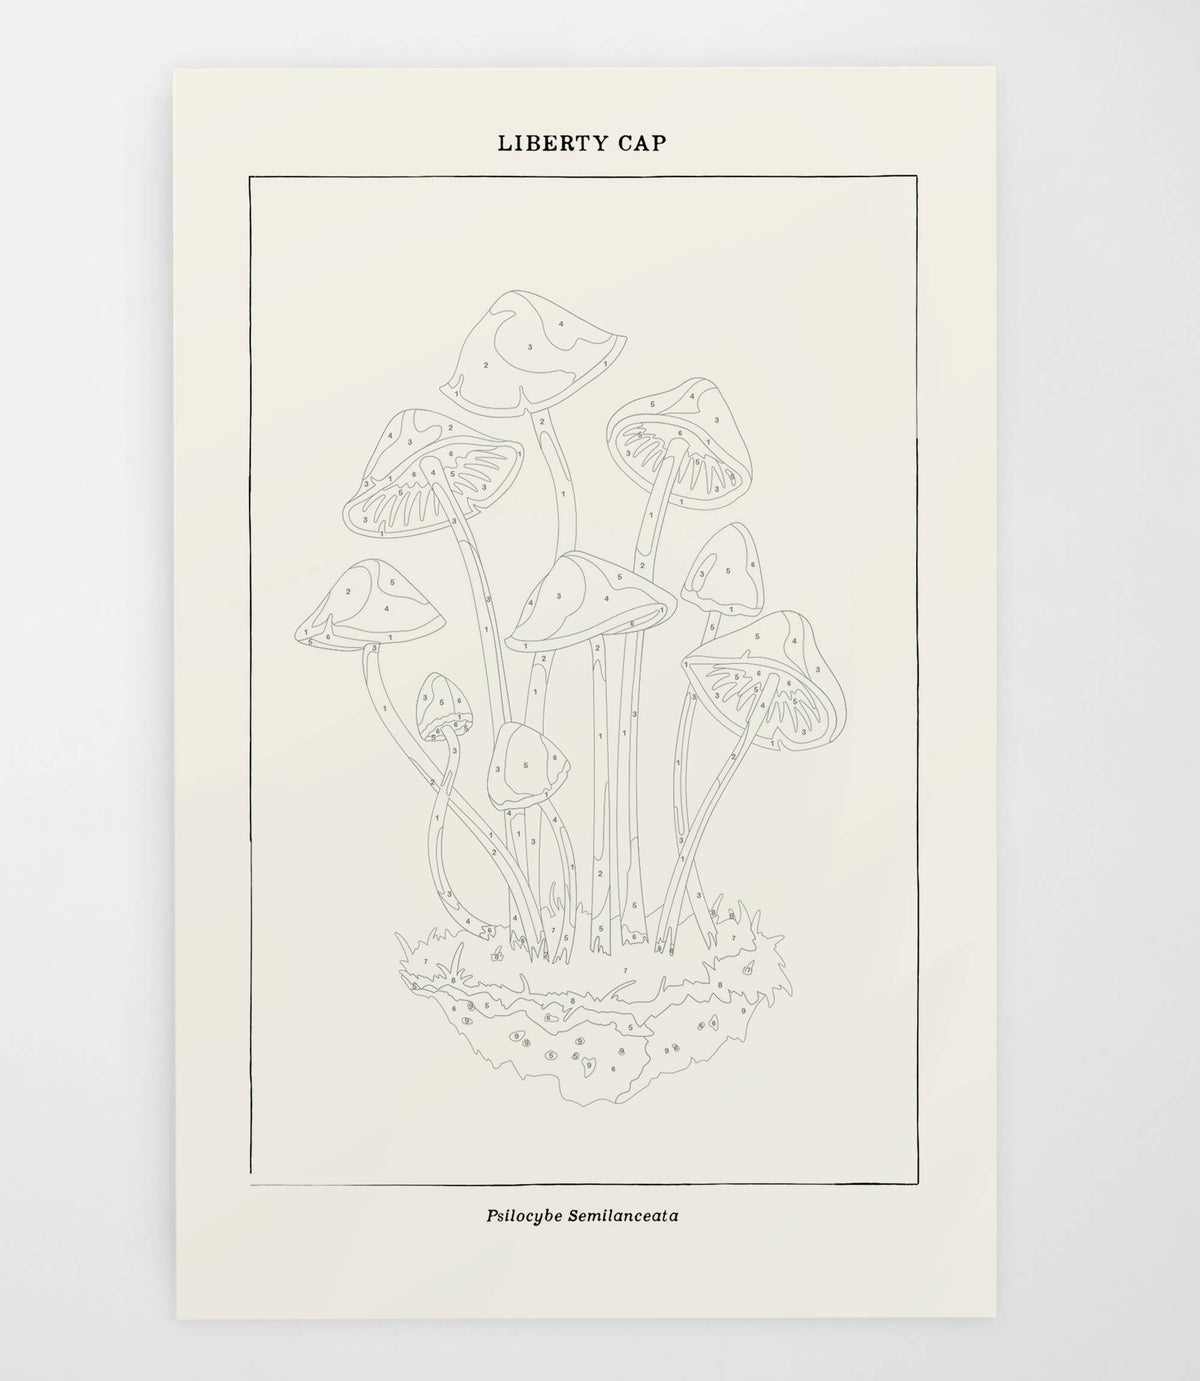 Mushroom Botanical | Modern Paint By Numbers Kit